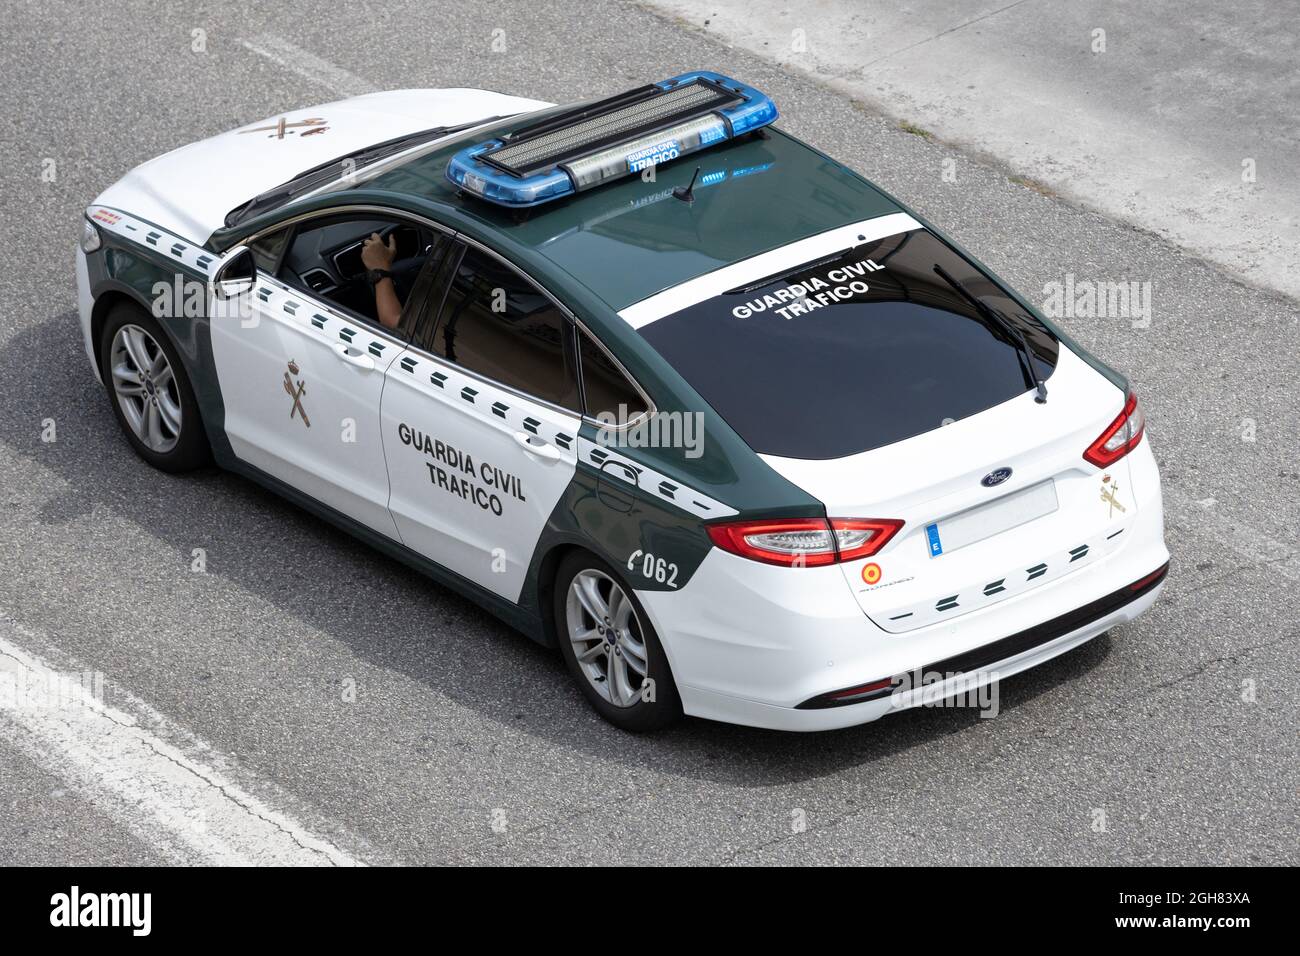 Galicia, Spain; September 6, 2021: Guardia Civil car on the road. Police Traffic surveillance Stock Photo